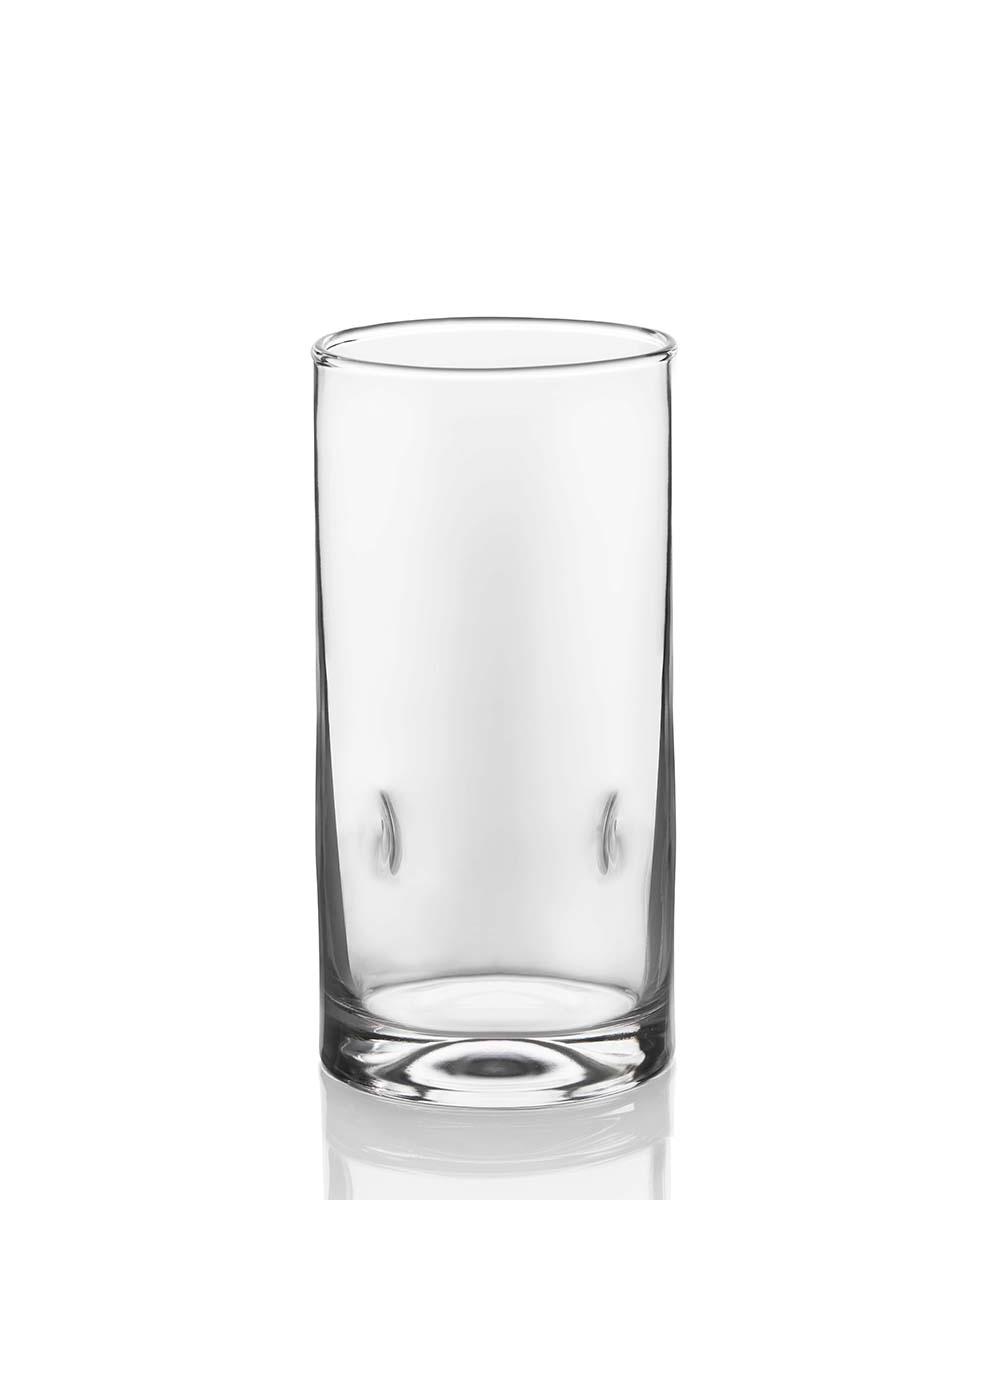 Libbey Impressions Glass Set, 4 Pk; image 2 of 2